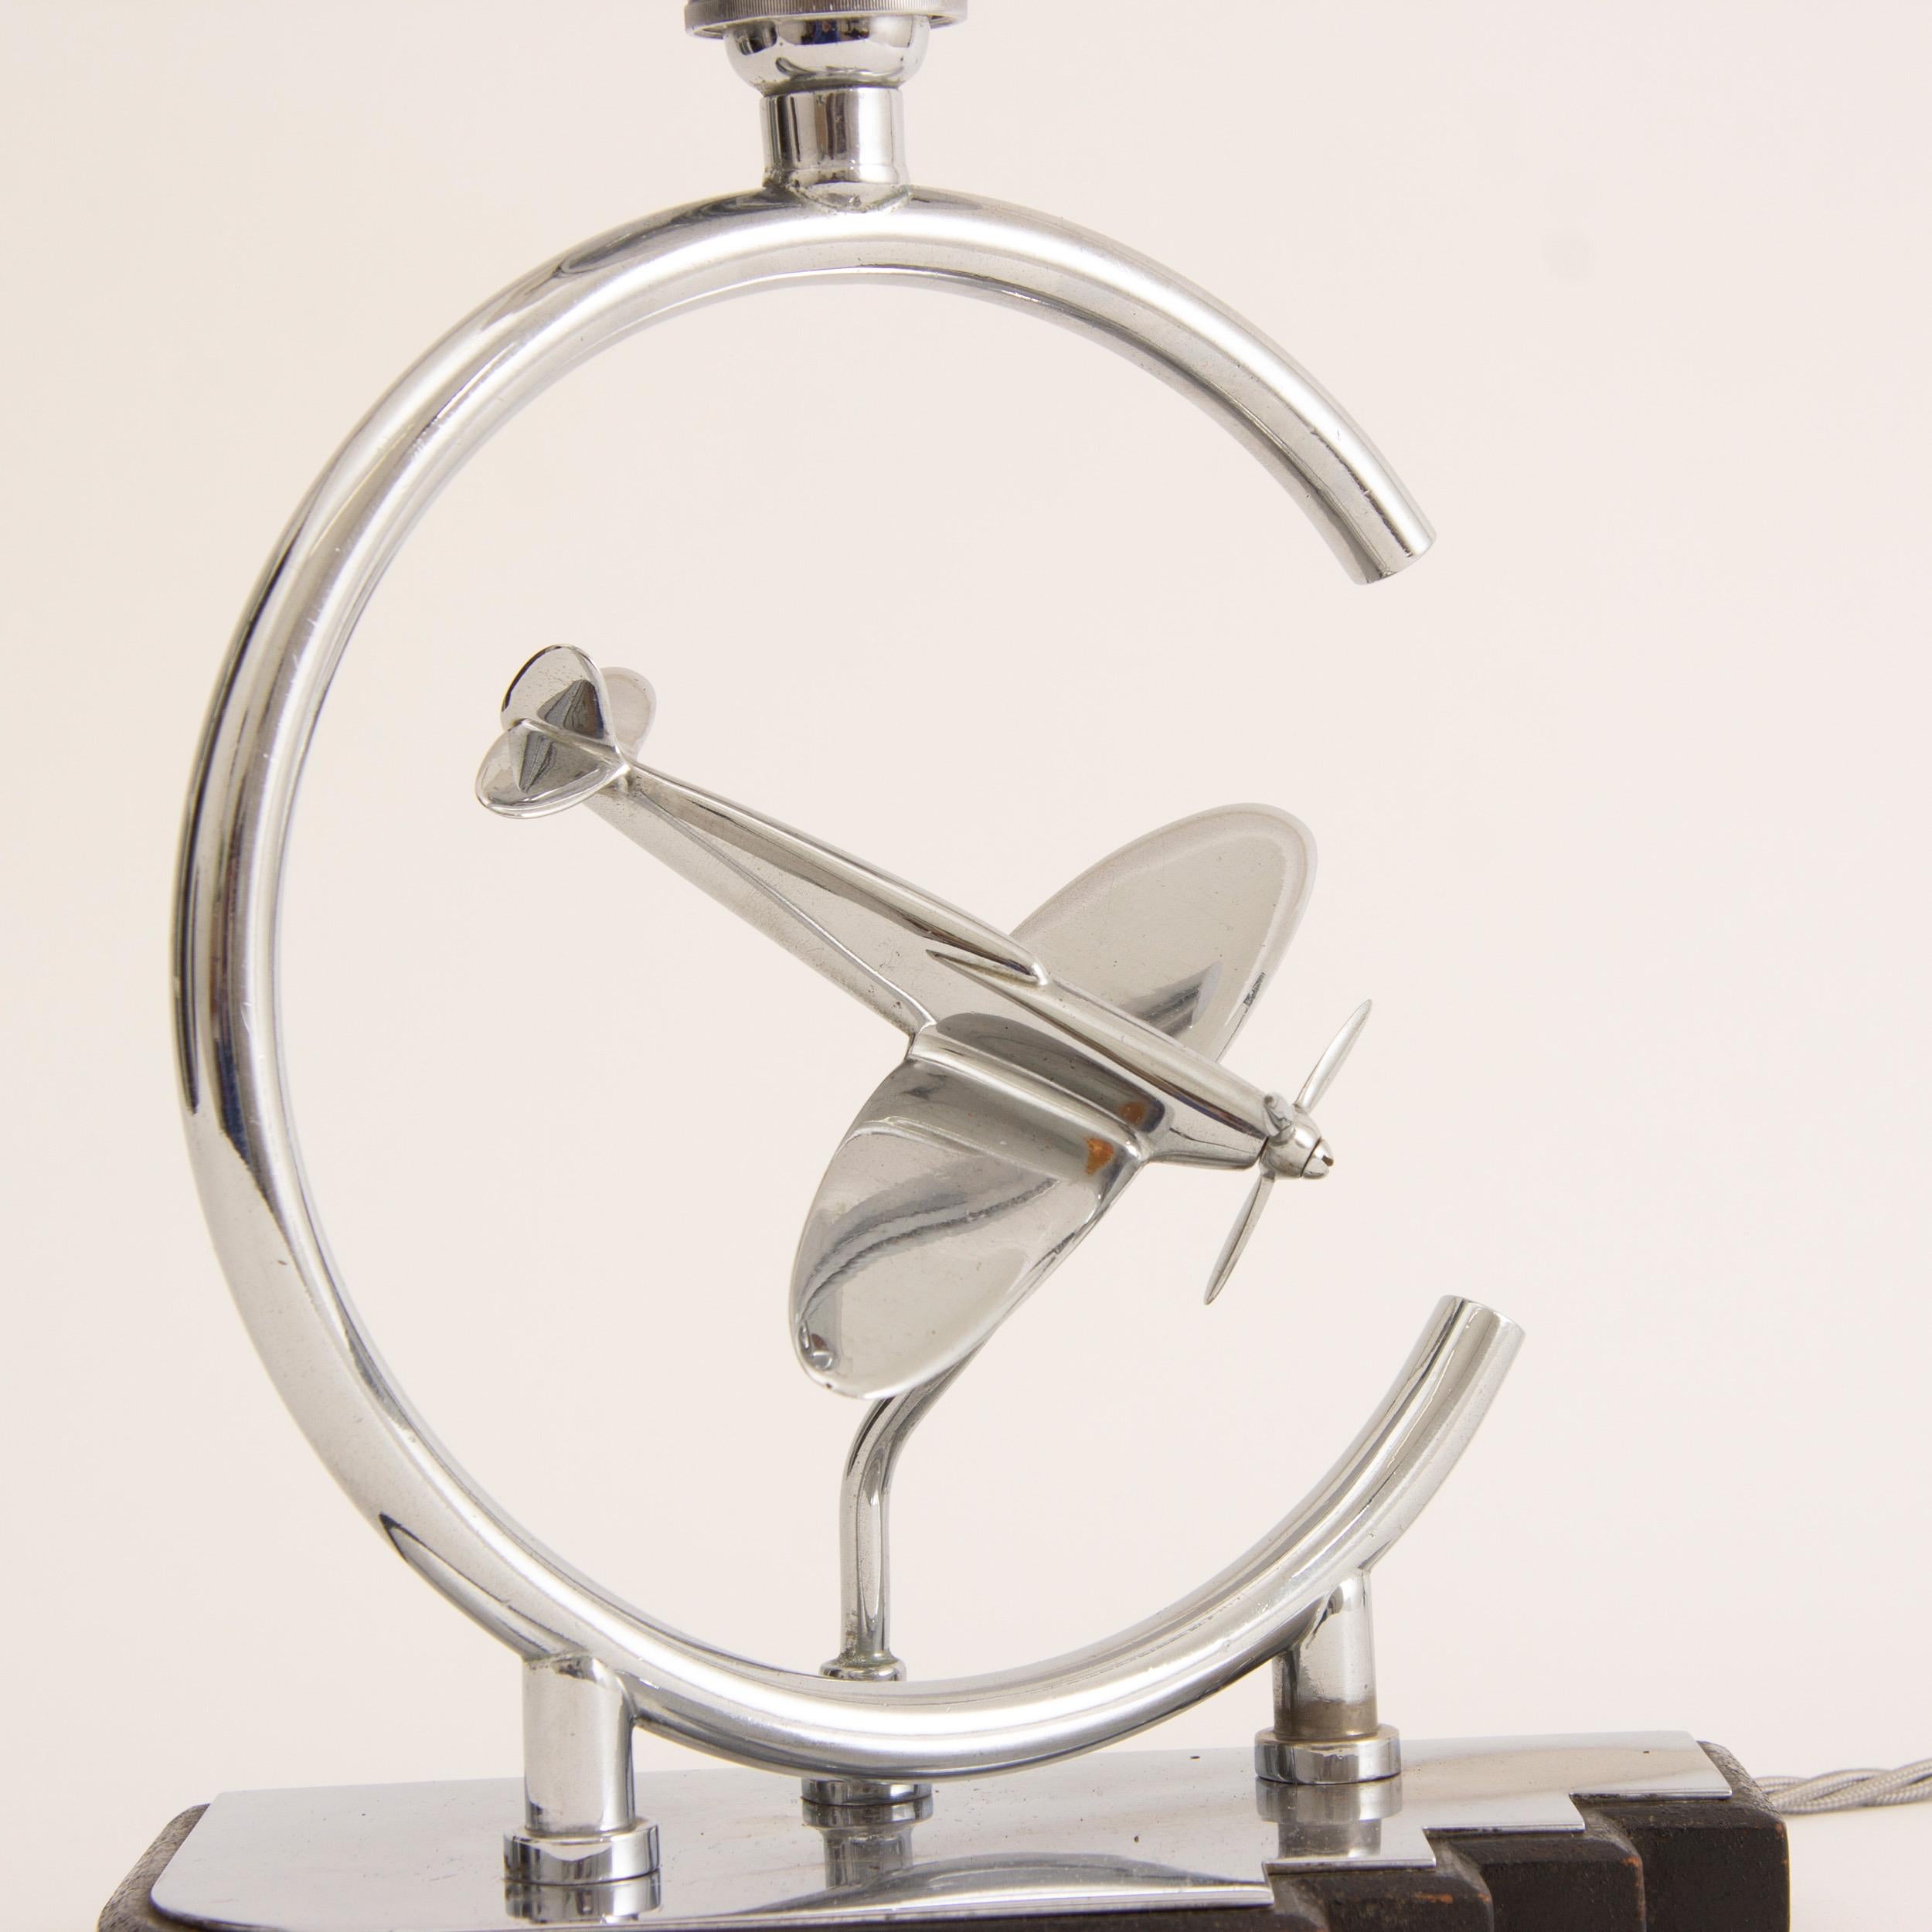 20th Century Art Deco Table Lamp with Aeroplane and Sunburst Geometric Glass Shade